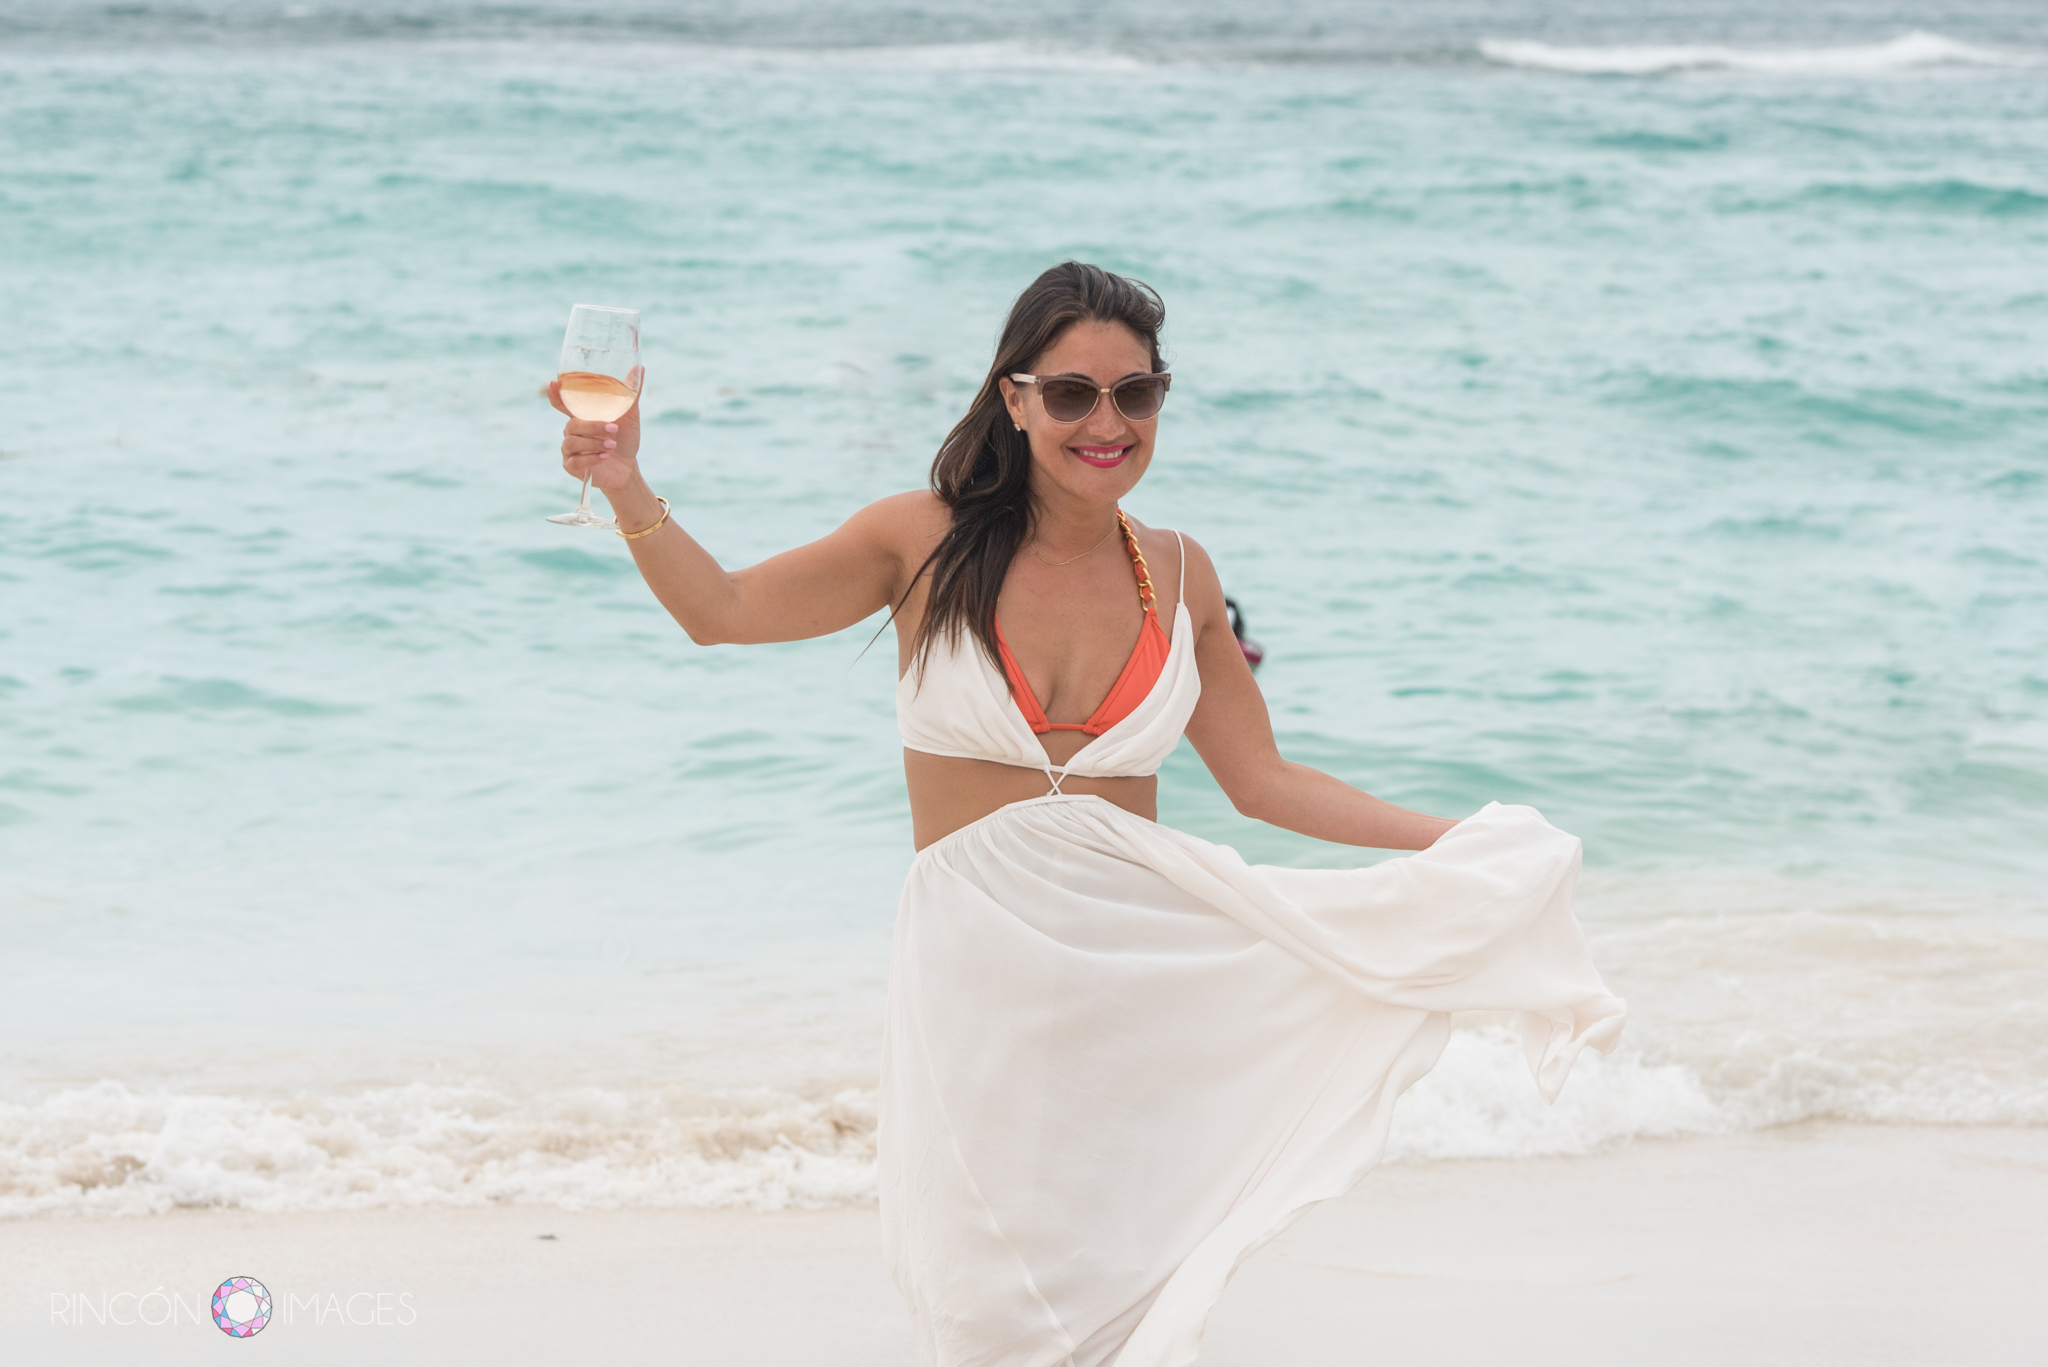 Bride wearing a white beach dress with an orange bikini holding a glass of white wine on the beach in St barths. 